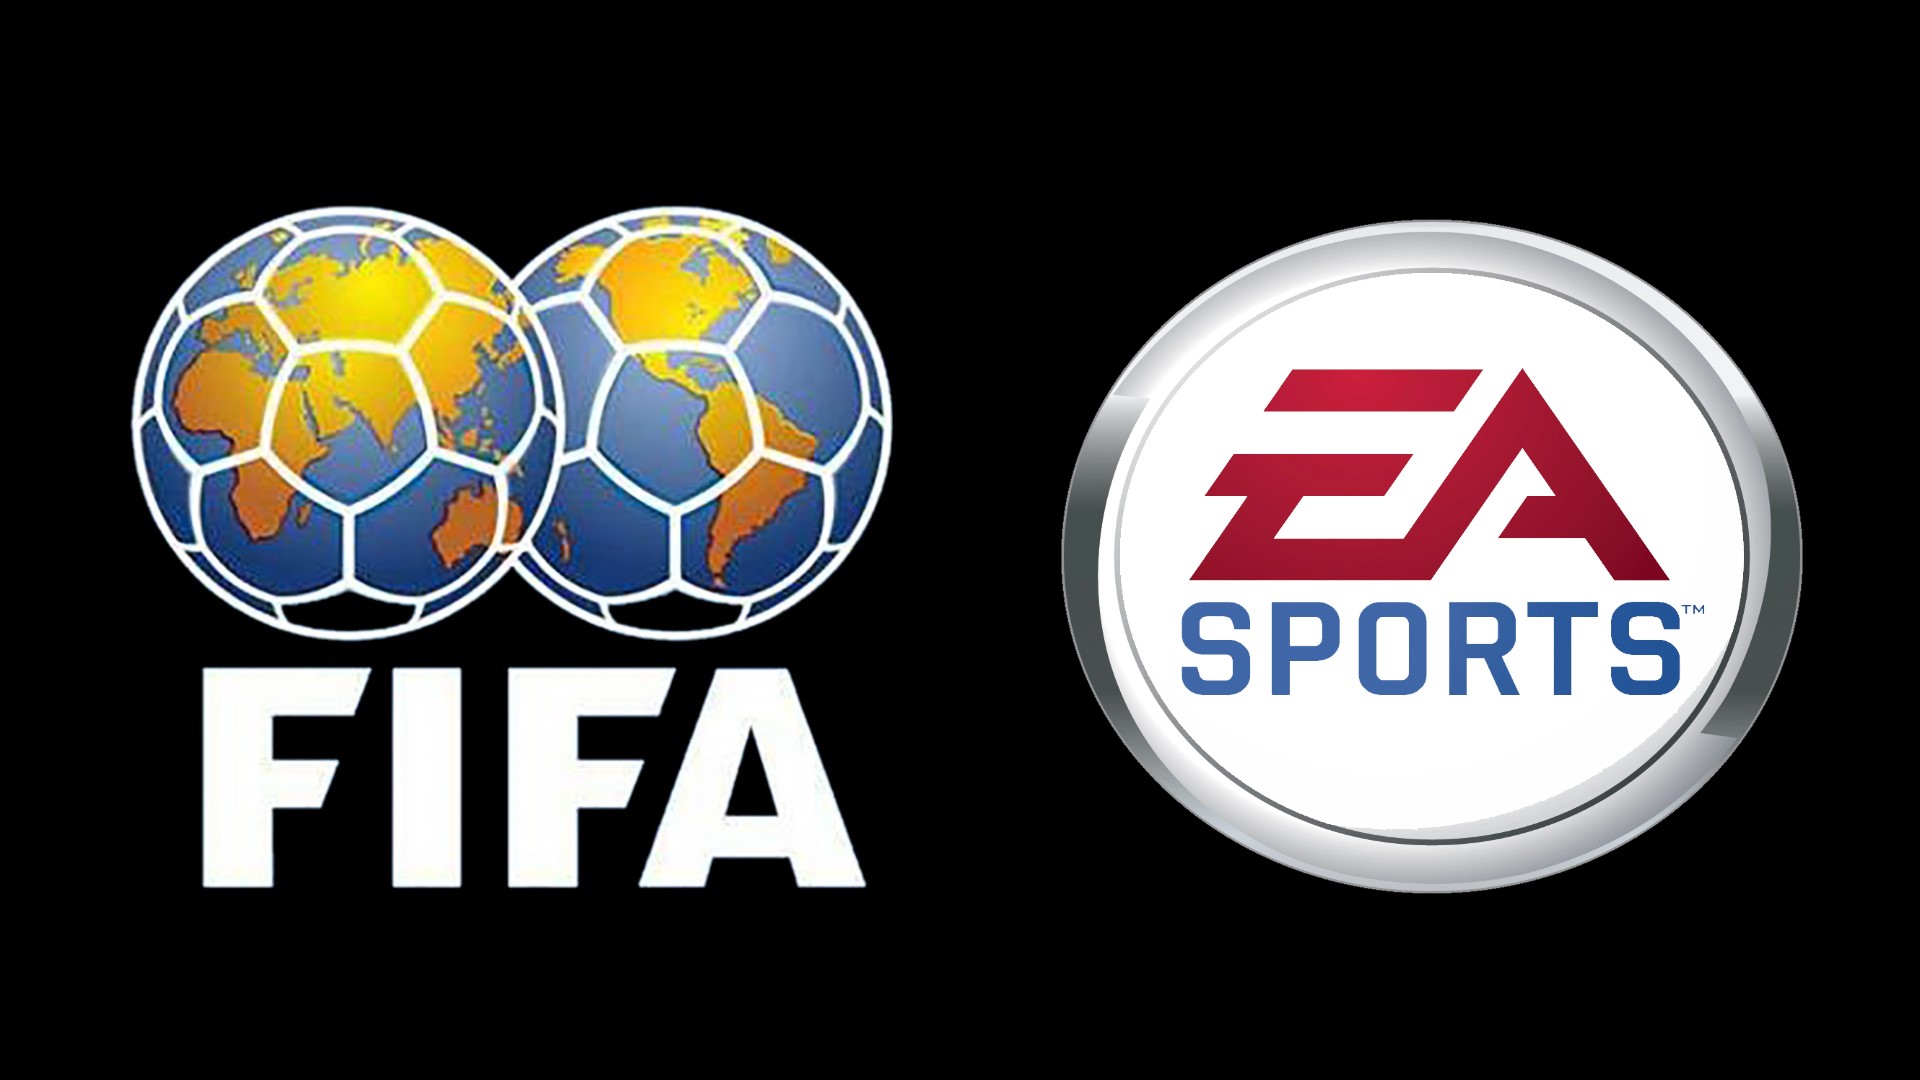 FIFA vs EA SPORTS FC